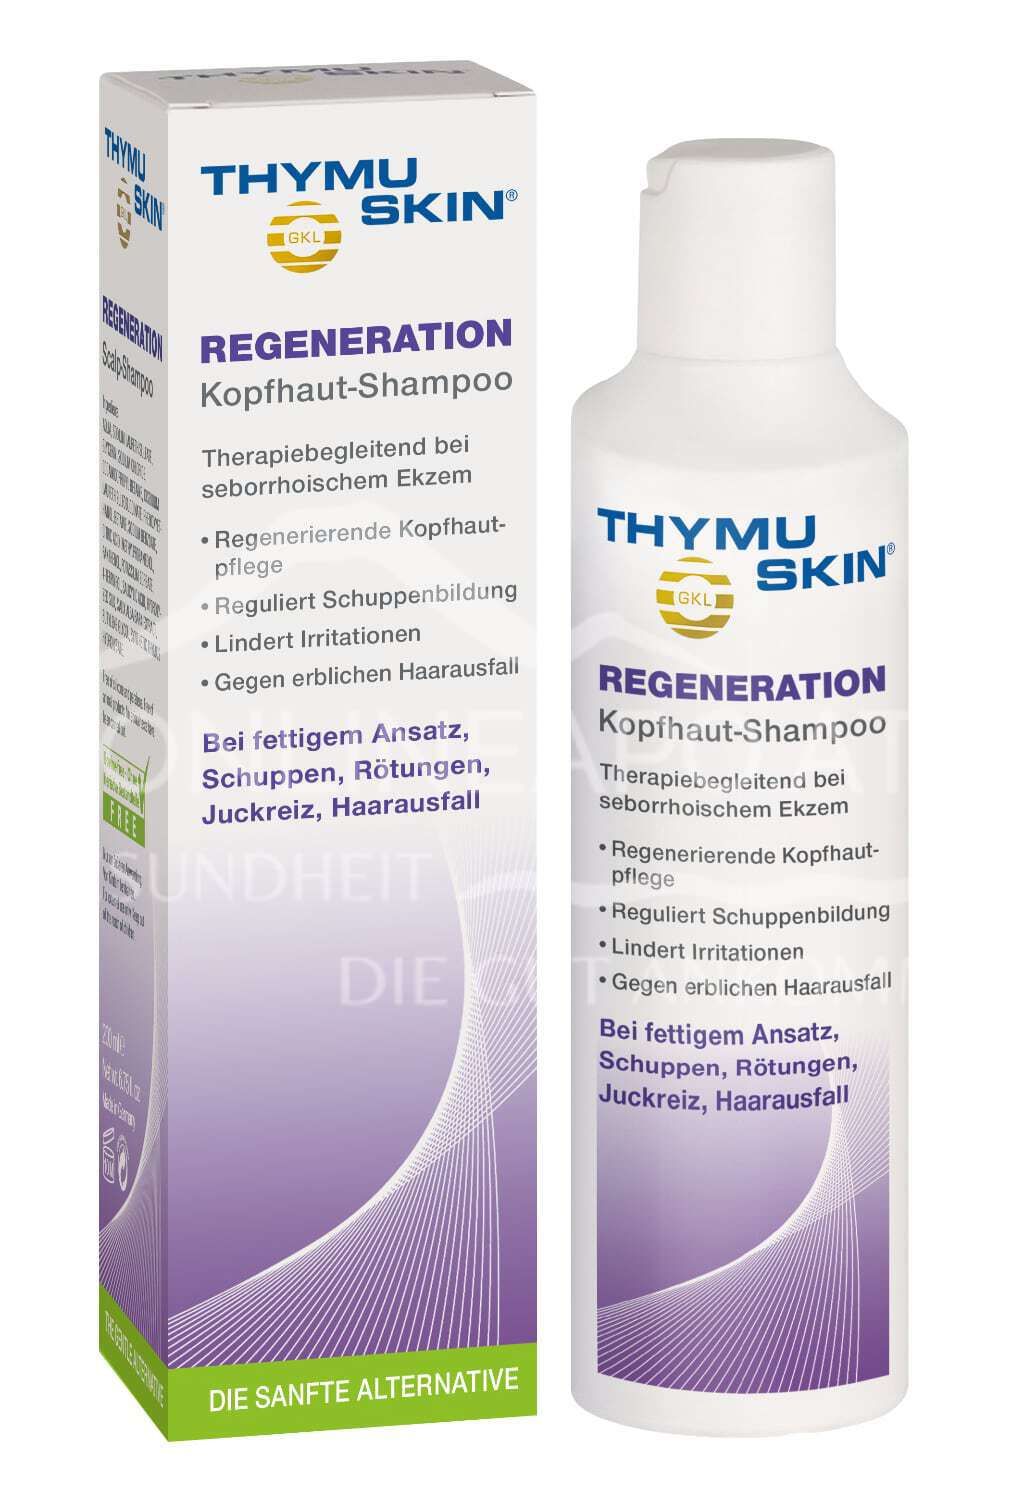 Thymuskin Regeneration Kopfhaut-Shampoo